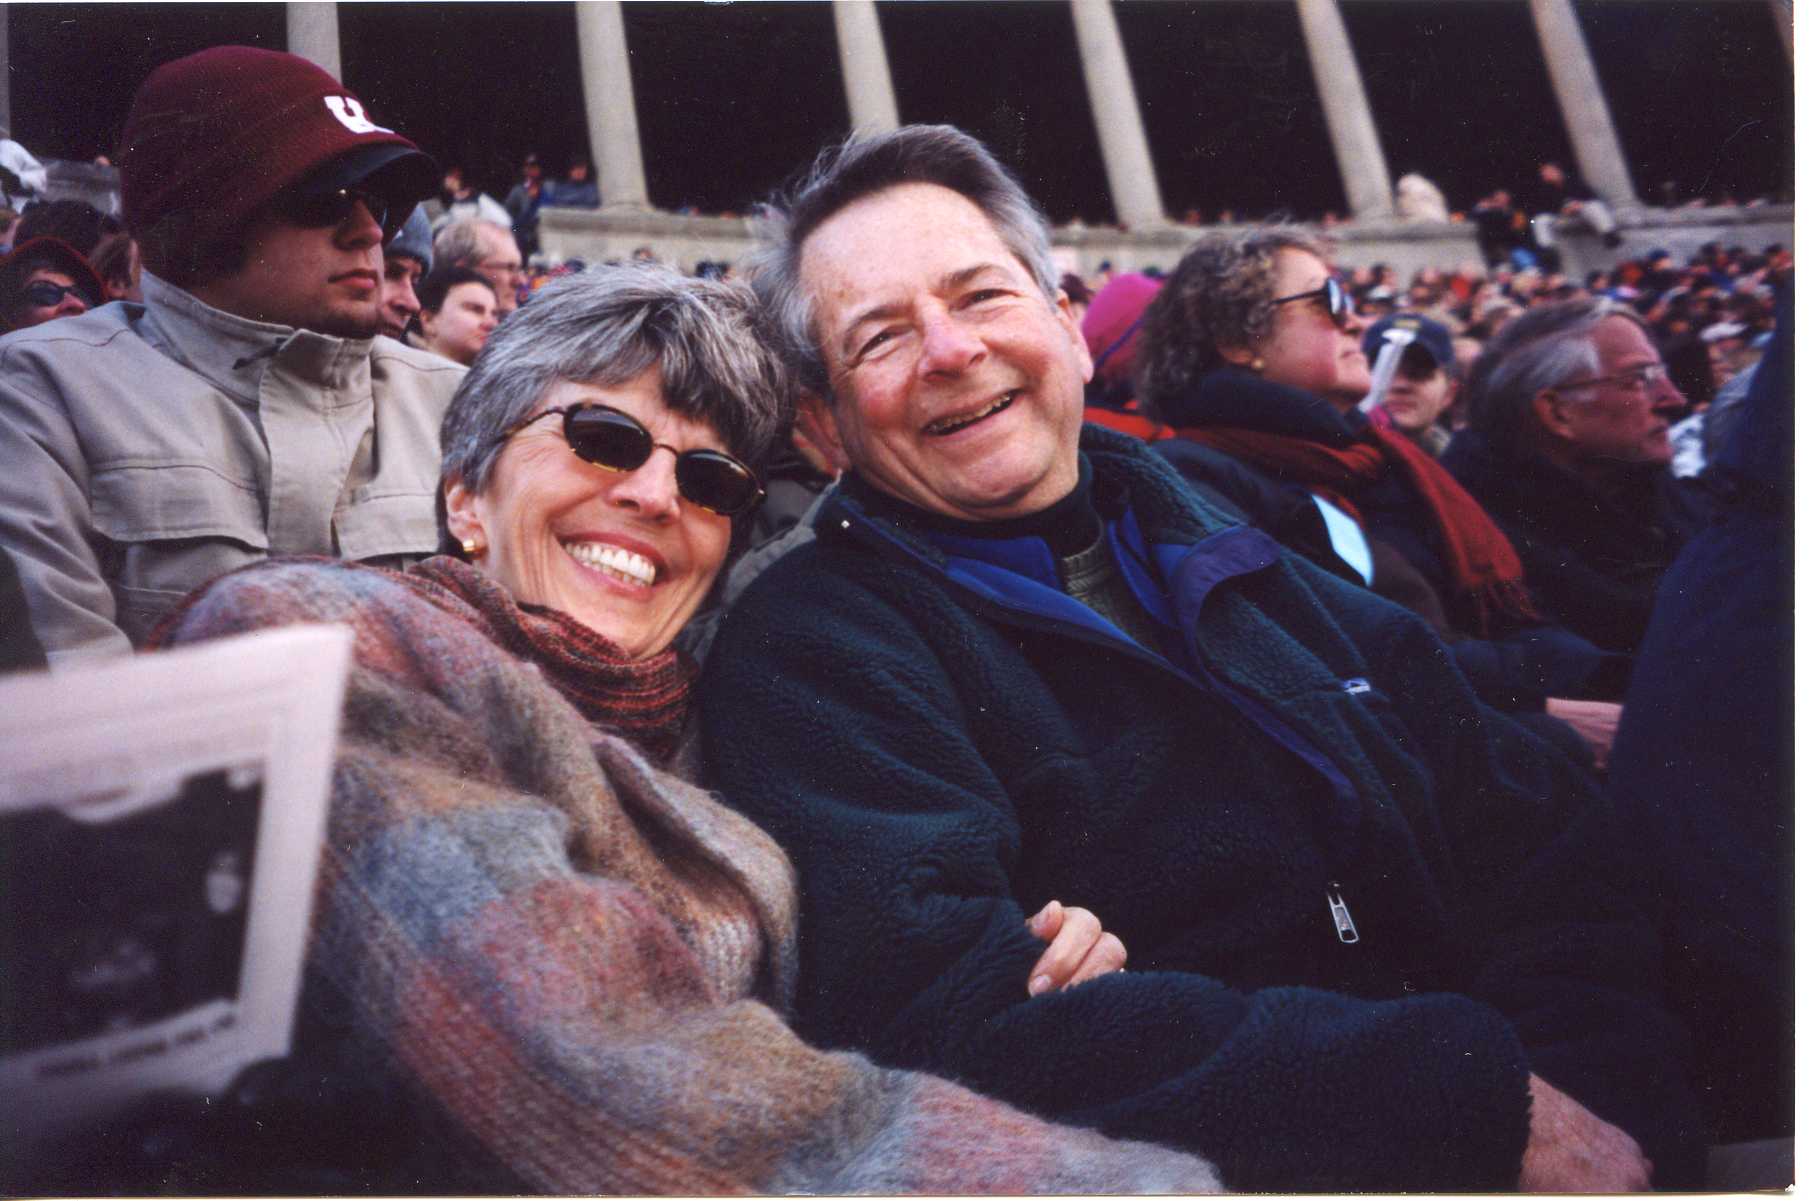 A woman and man at a football game